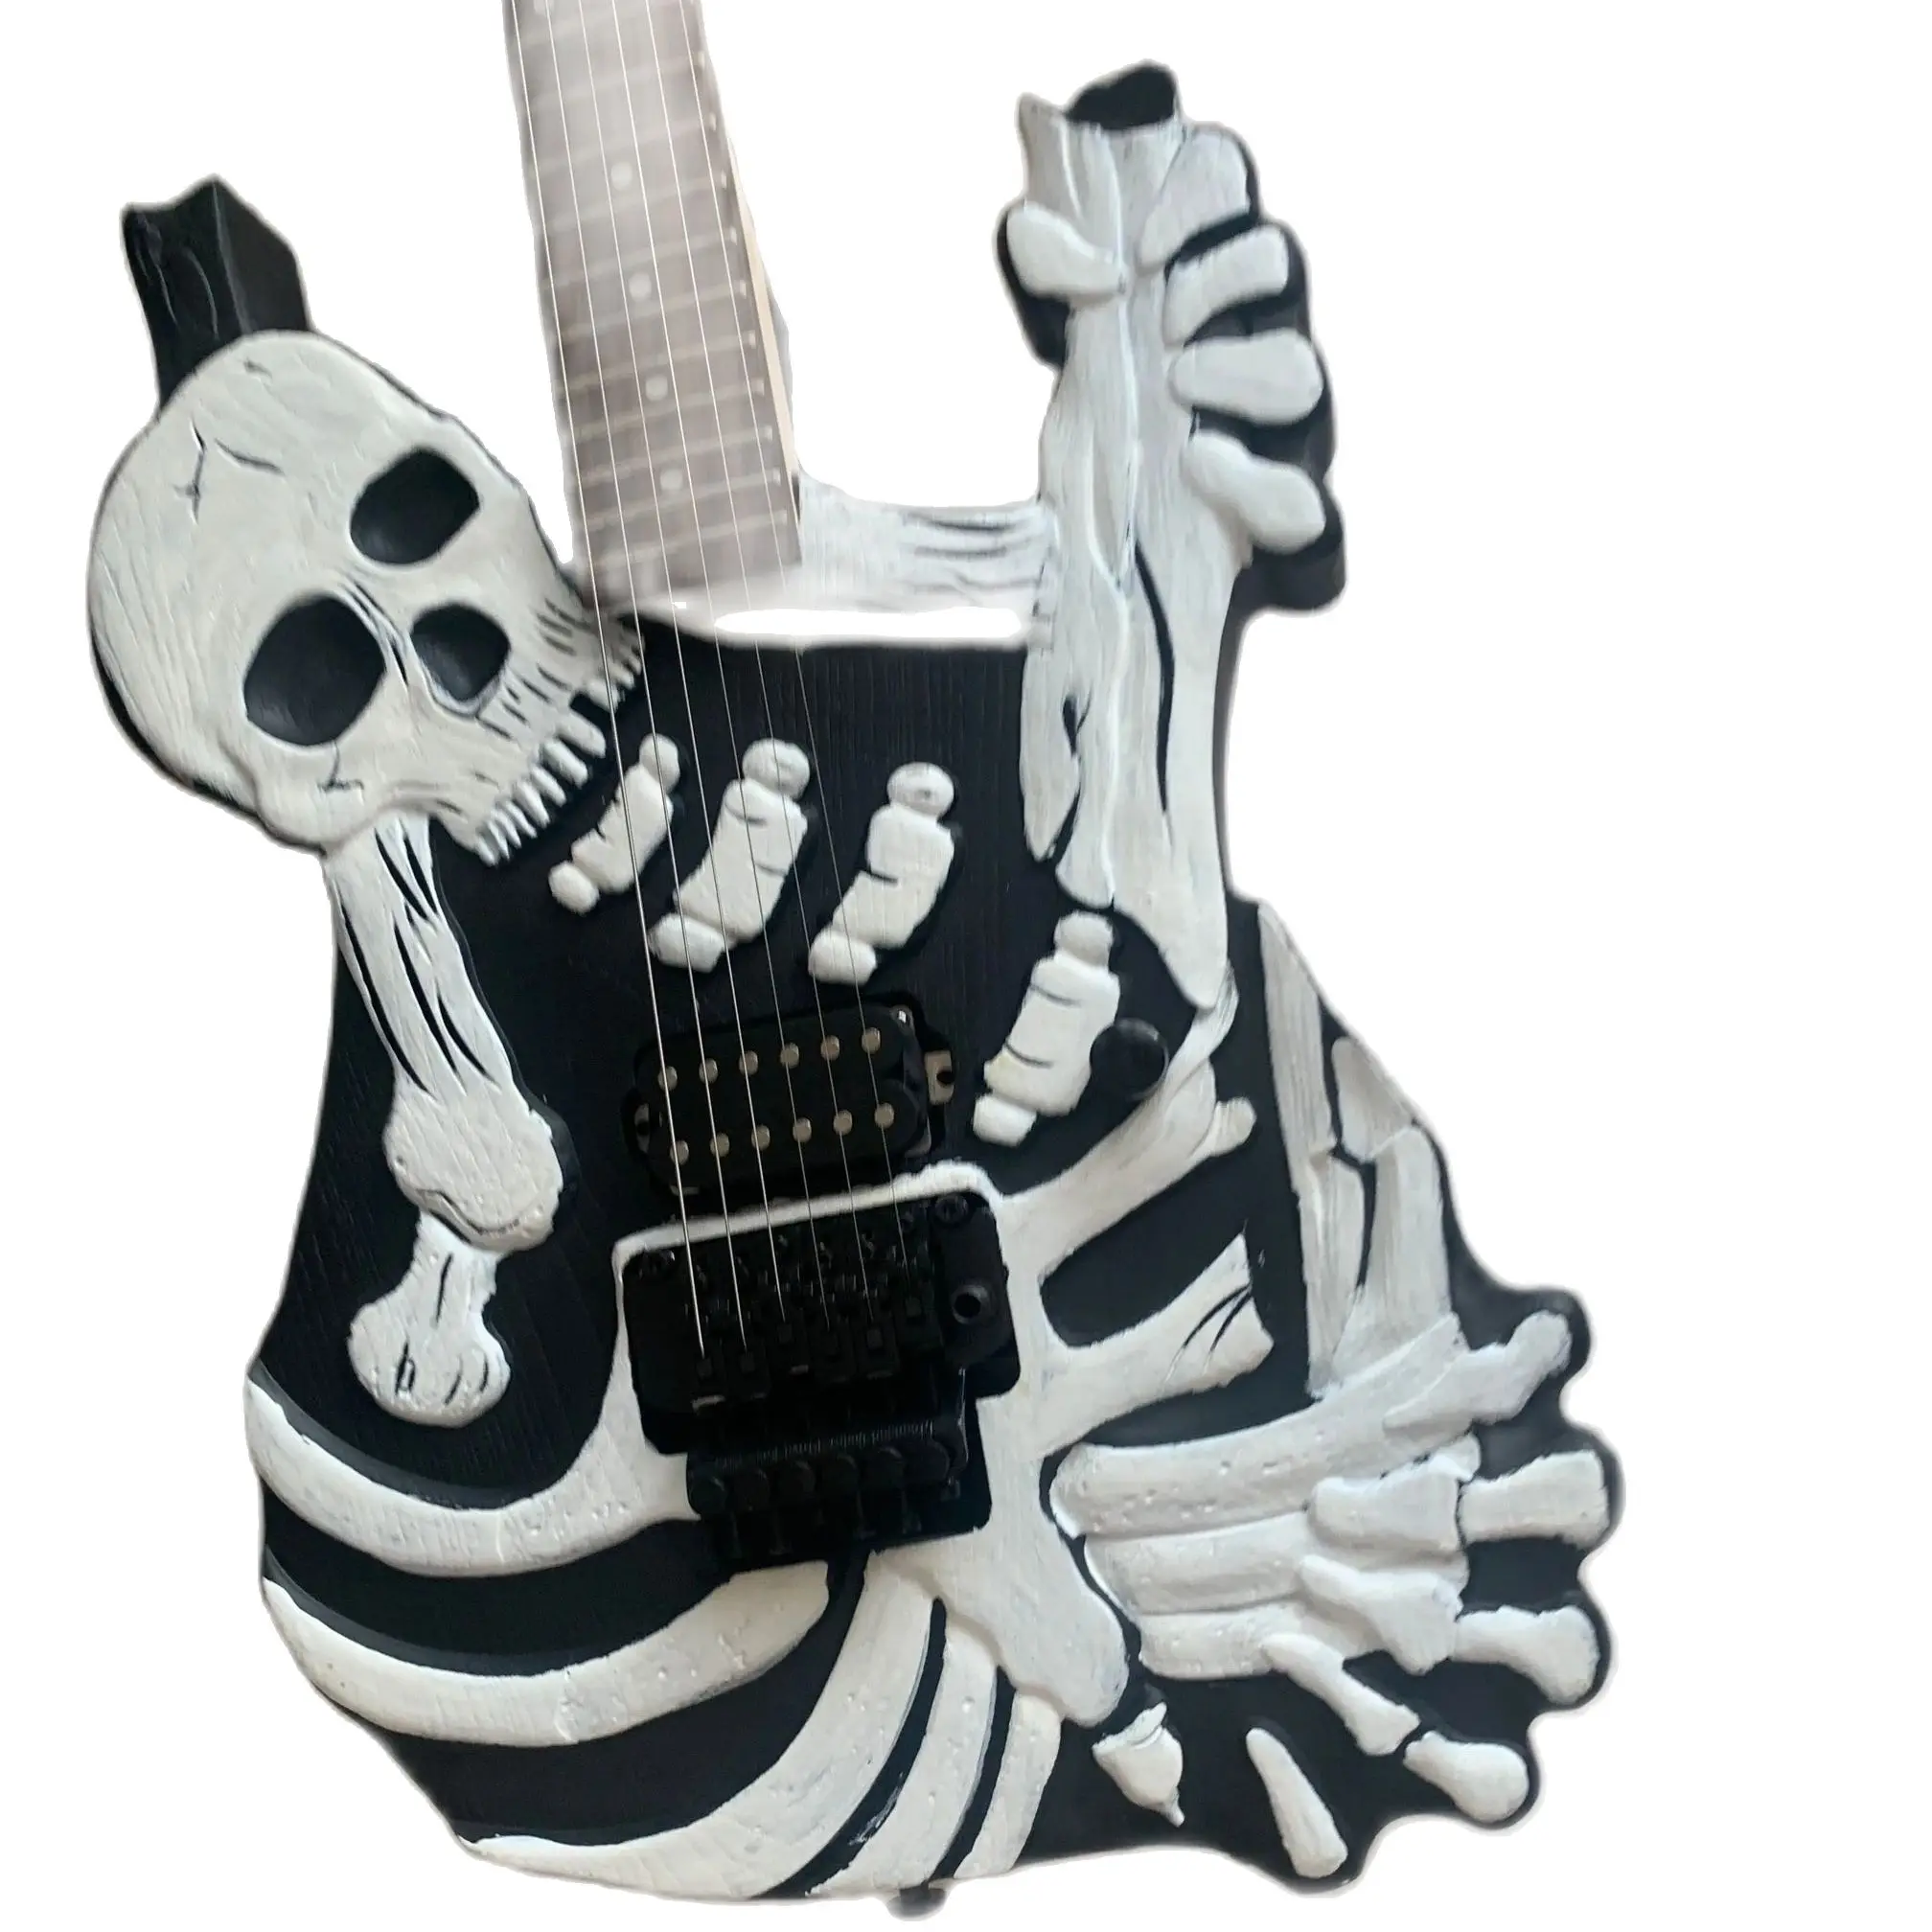 

Upgrade Skull N Bones Mr Scary Electric Guitar Johnny, Black Hardware Guitars Professional Guitar